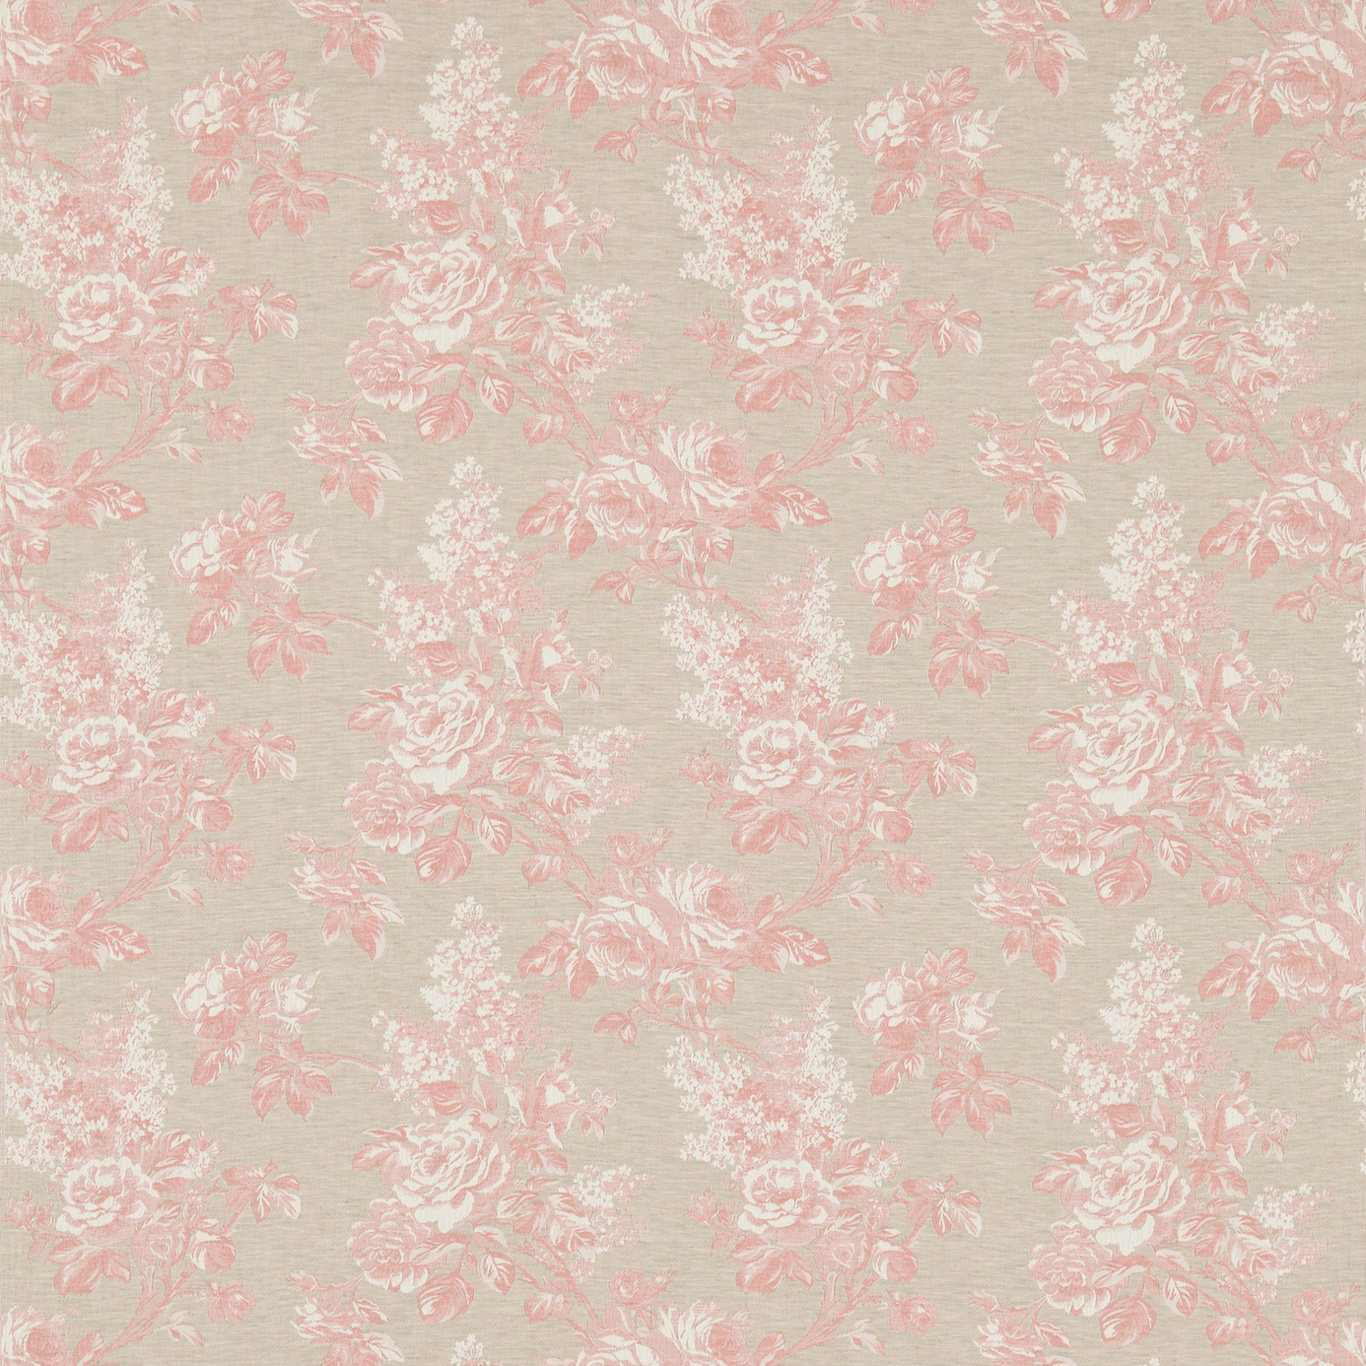 Sorilla Damask Shell Pink/Linen Fabric by SAN